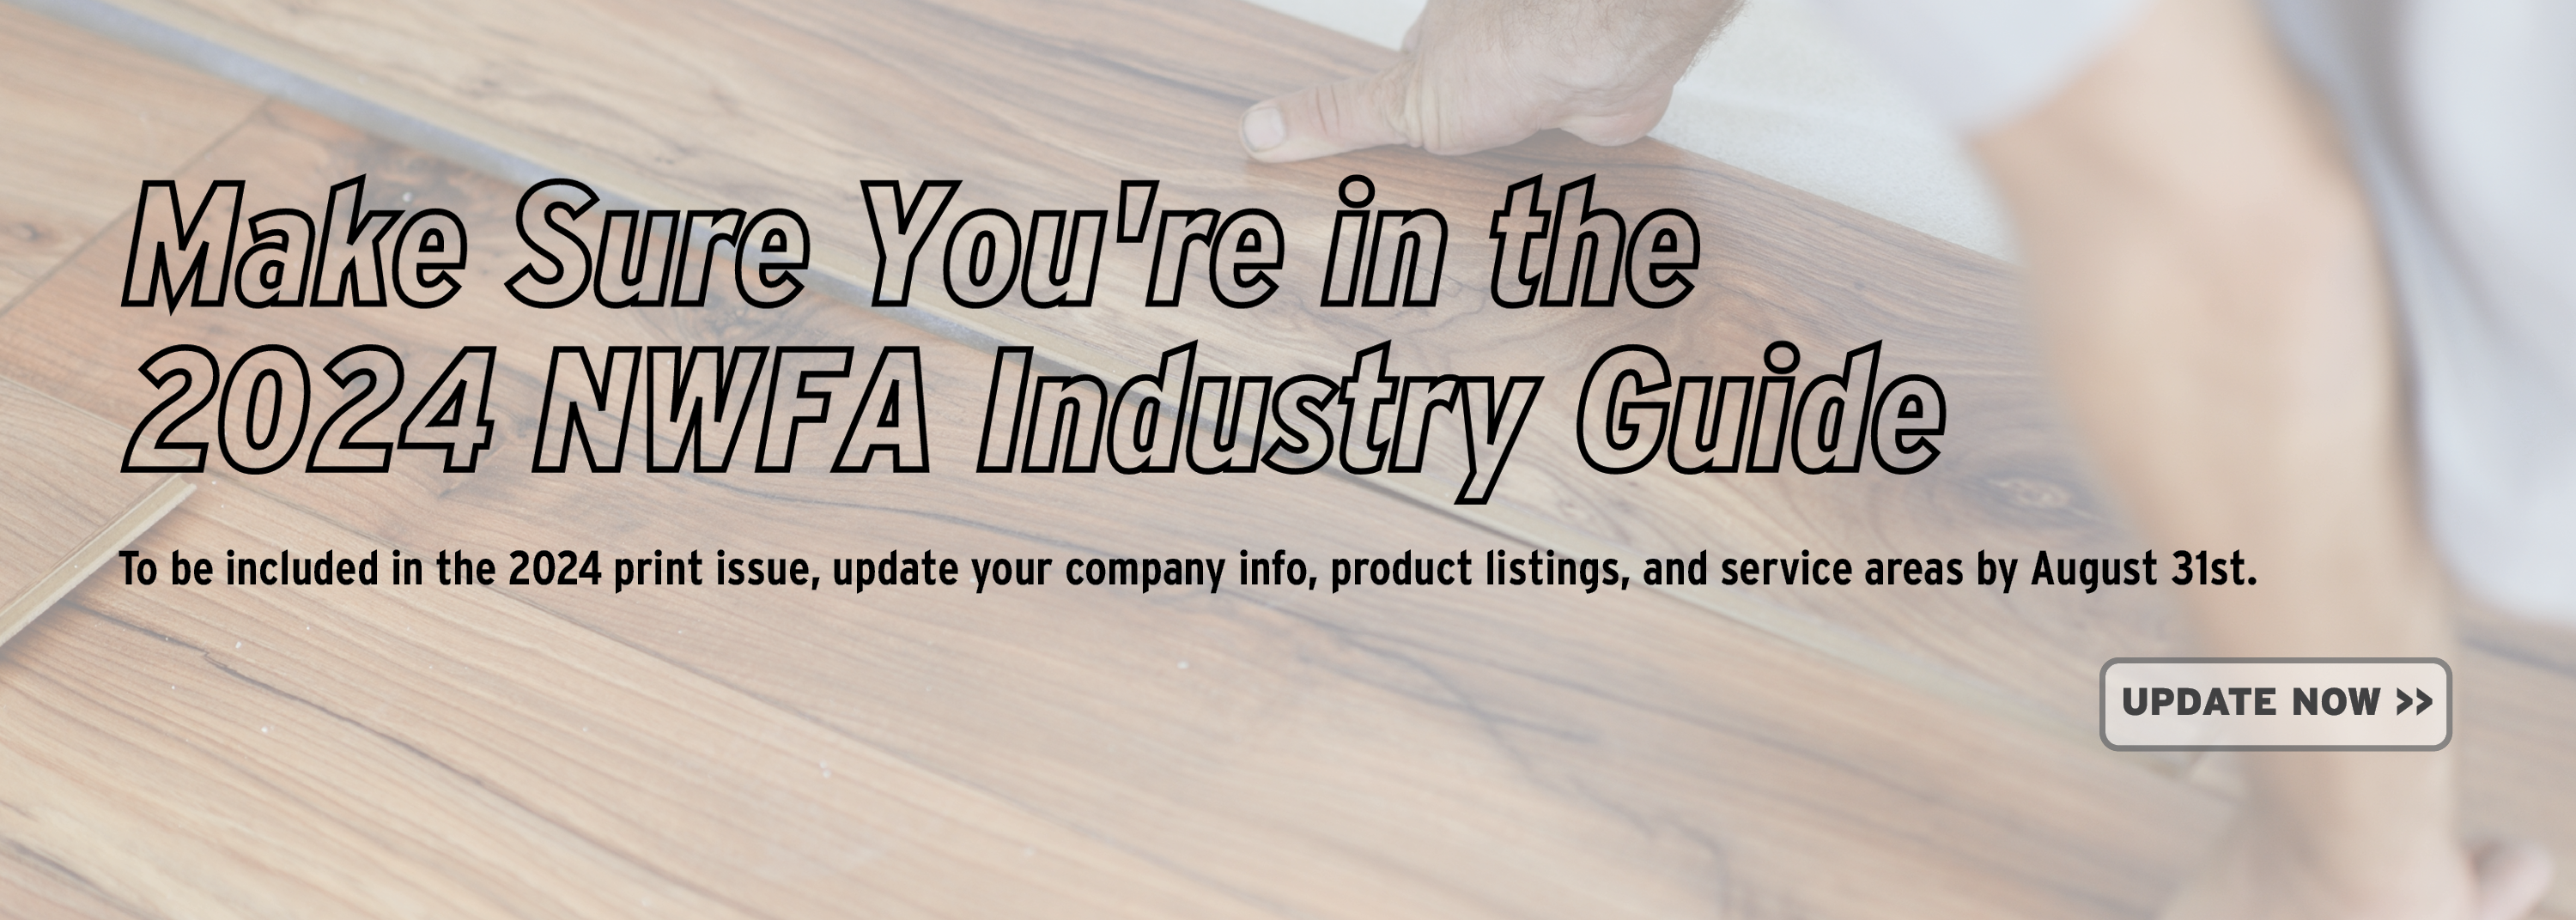 2024 NWFA Industry Guide